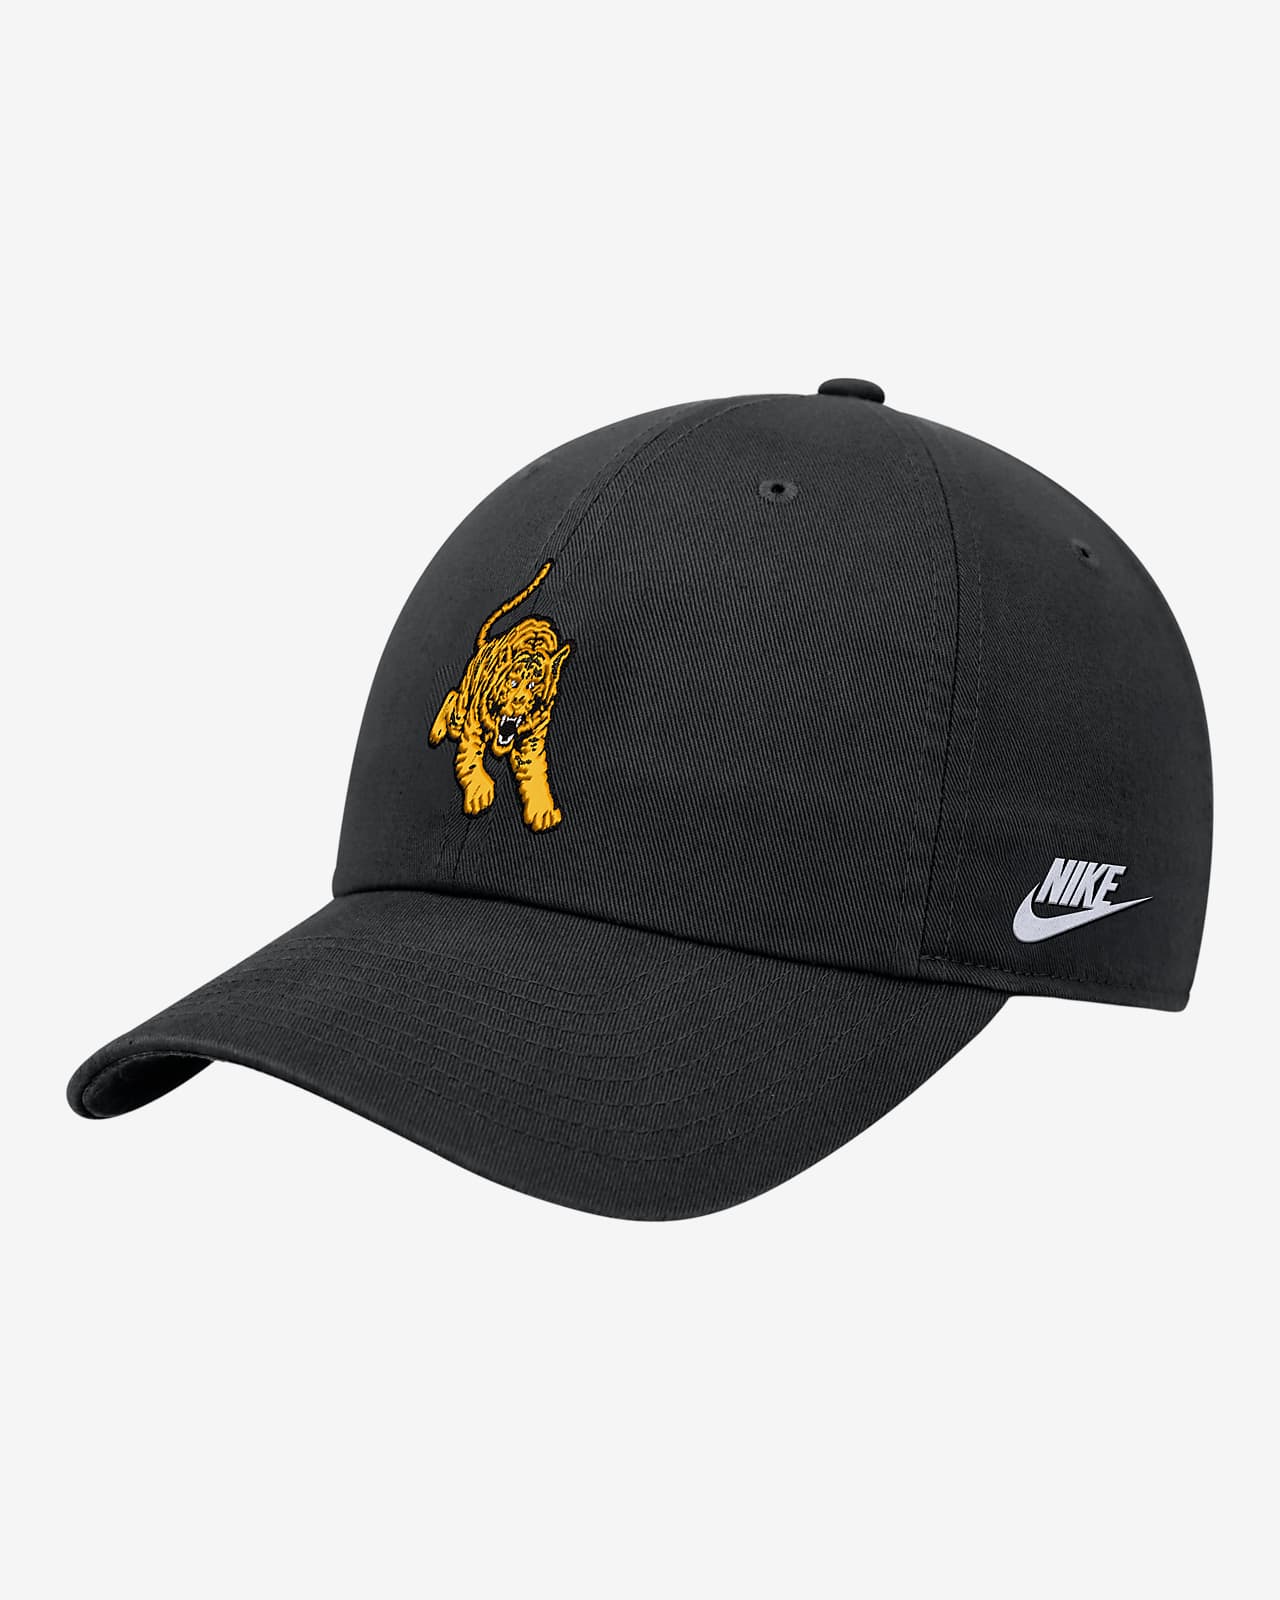 Tuskegee Nike College Adjustable Cap